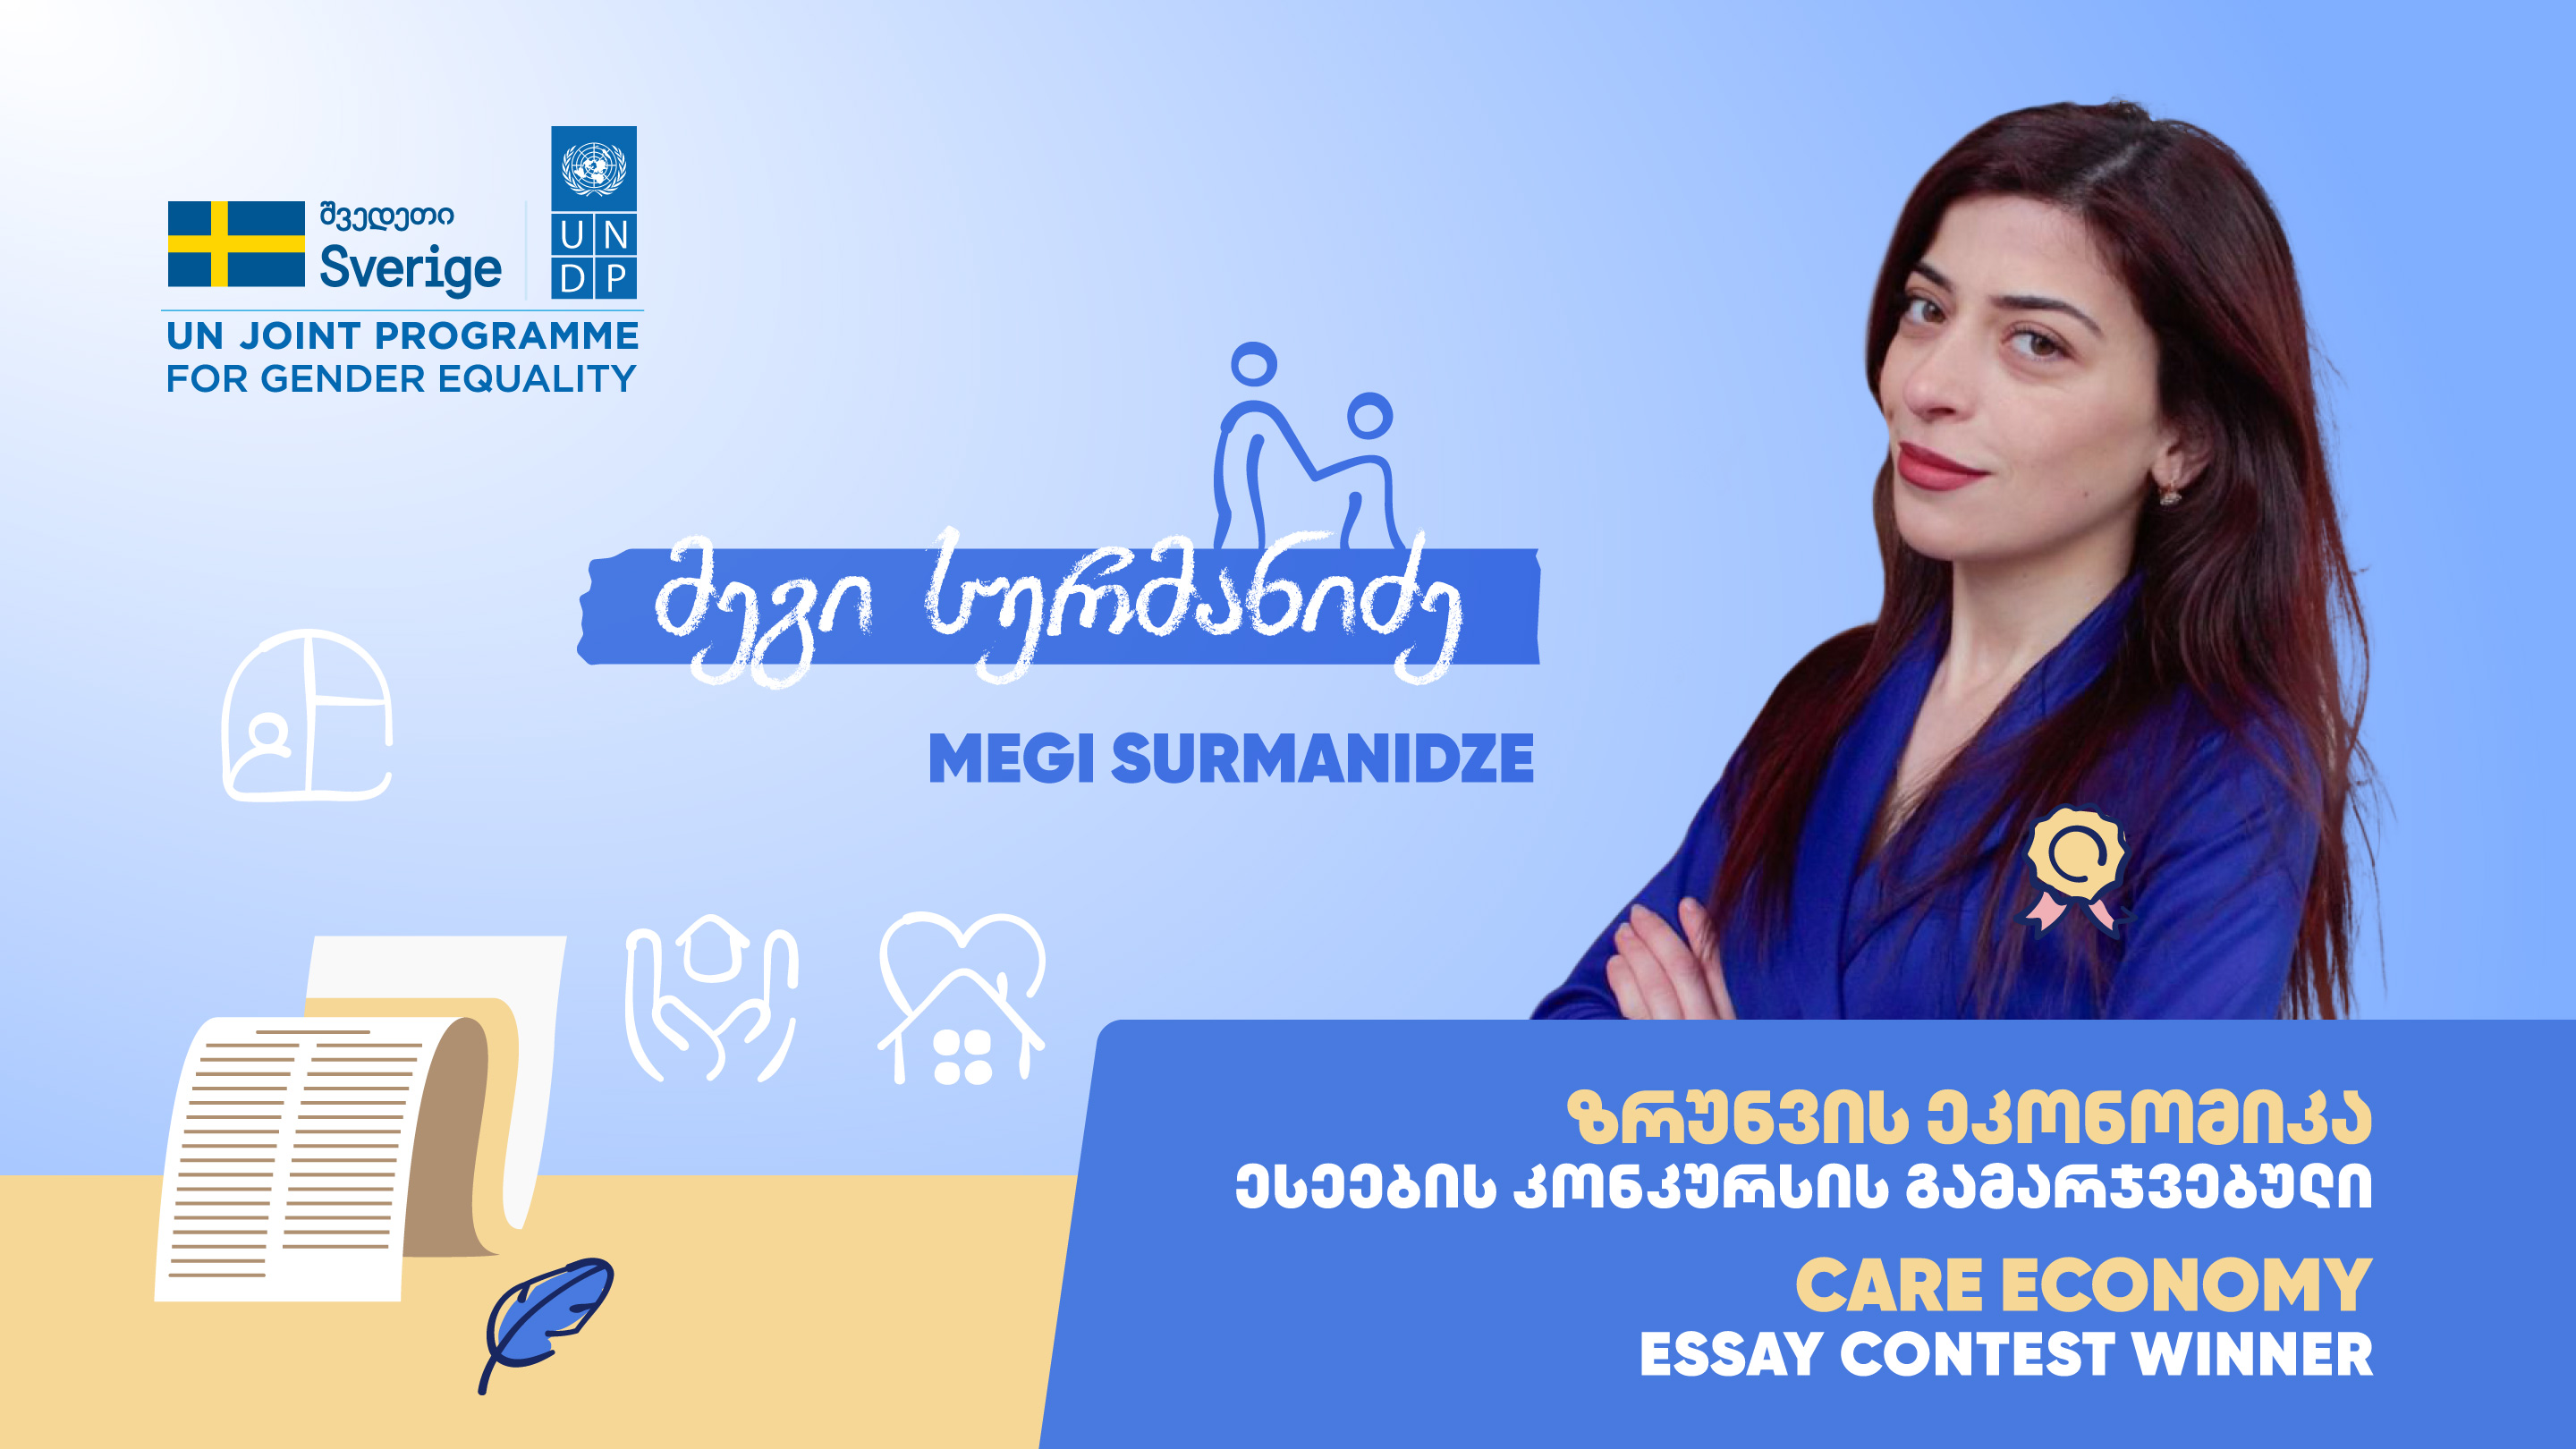 Megi Surmanidze, Student, Winner of the UNDP and Sweden Essay Contest on Care Economy